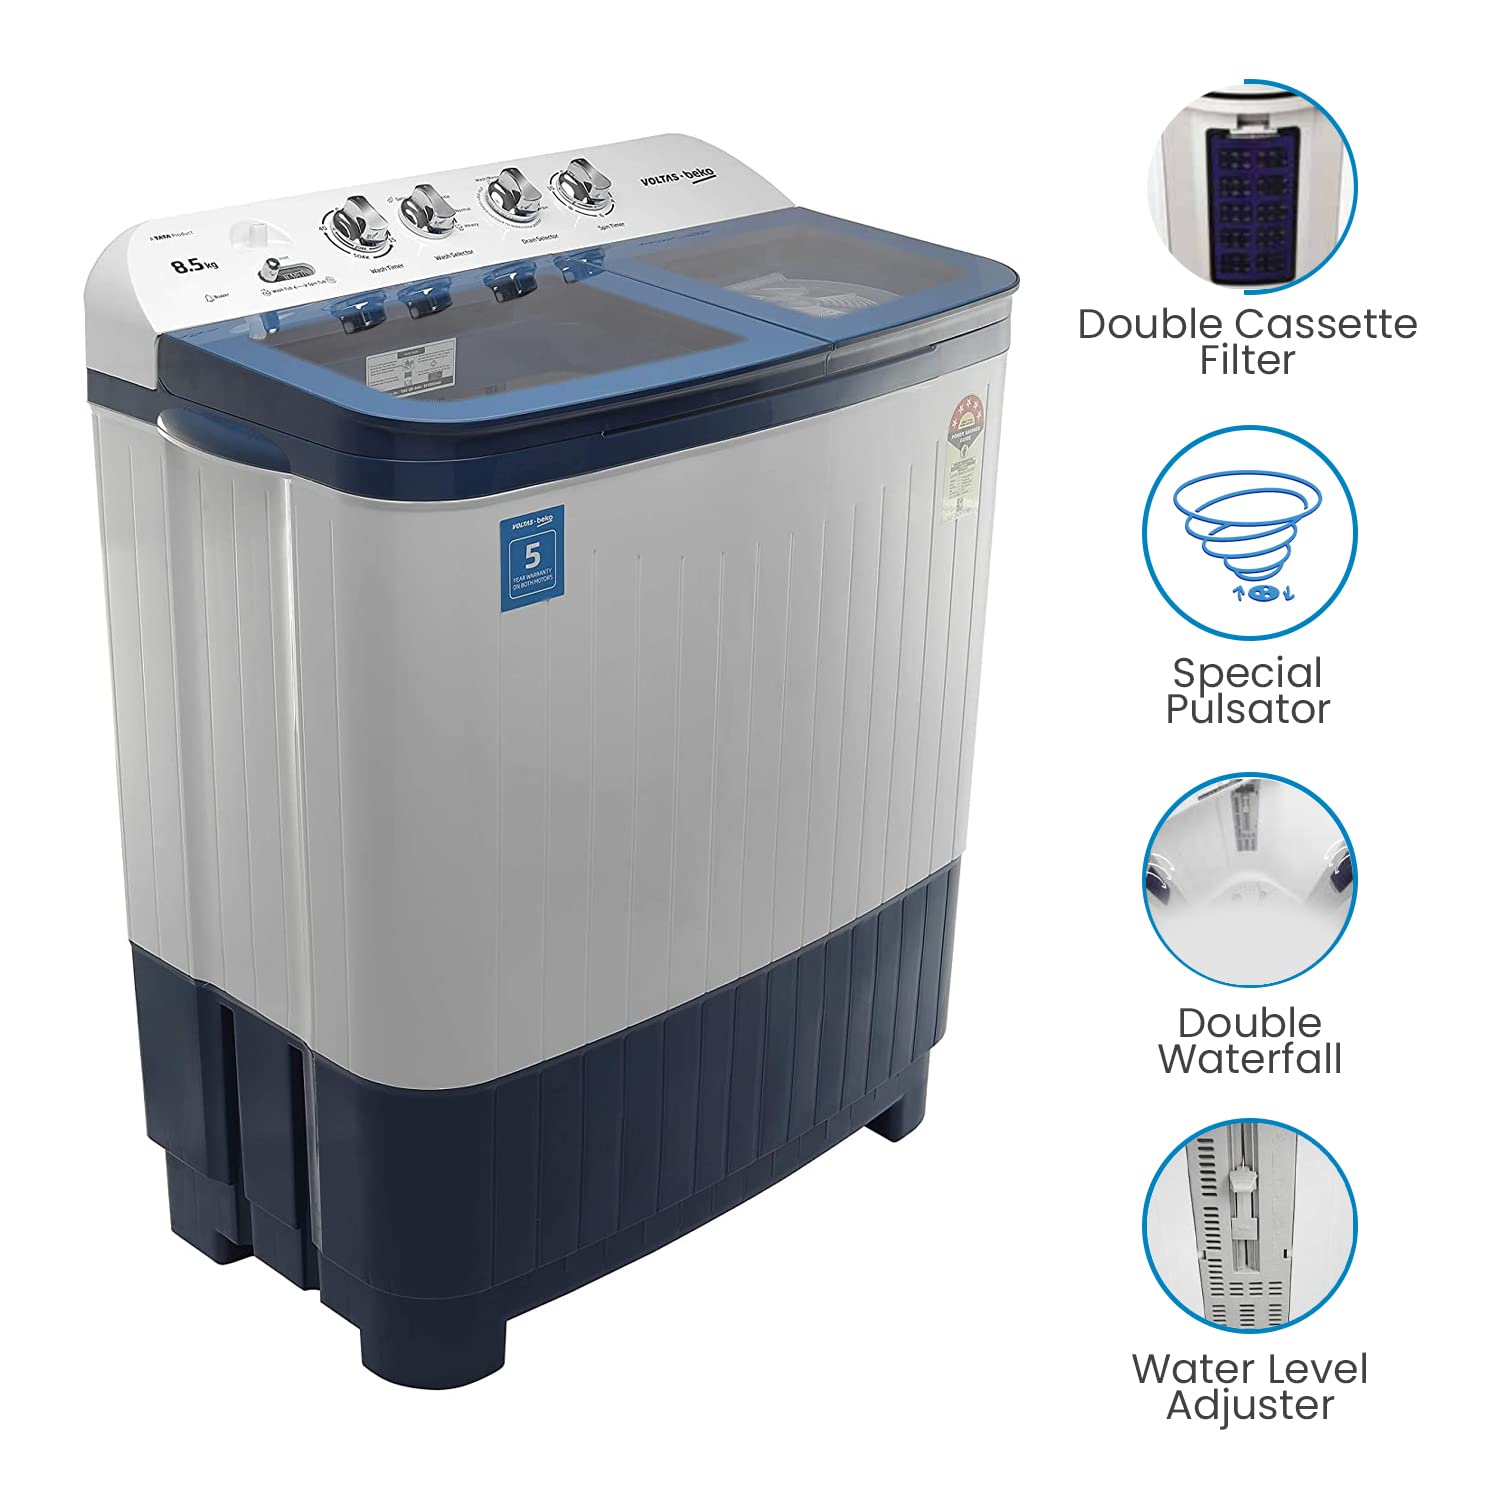 Voltas Beko WTT85DBLG 8.5 kg Semi-Automatic Top Loading Washing Machine ( Sky Blue) - Mahajan Electronics Online